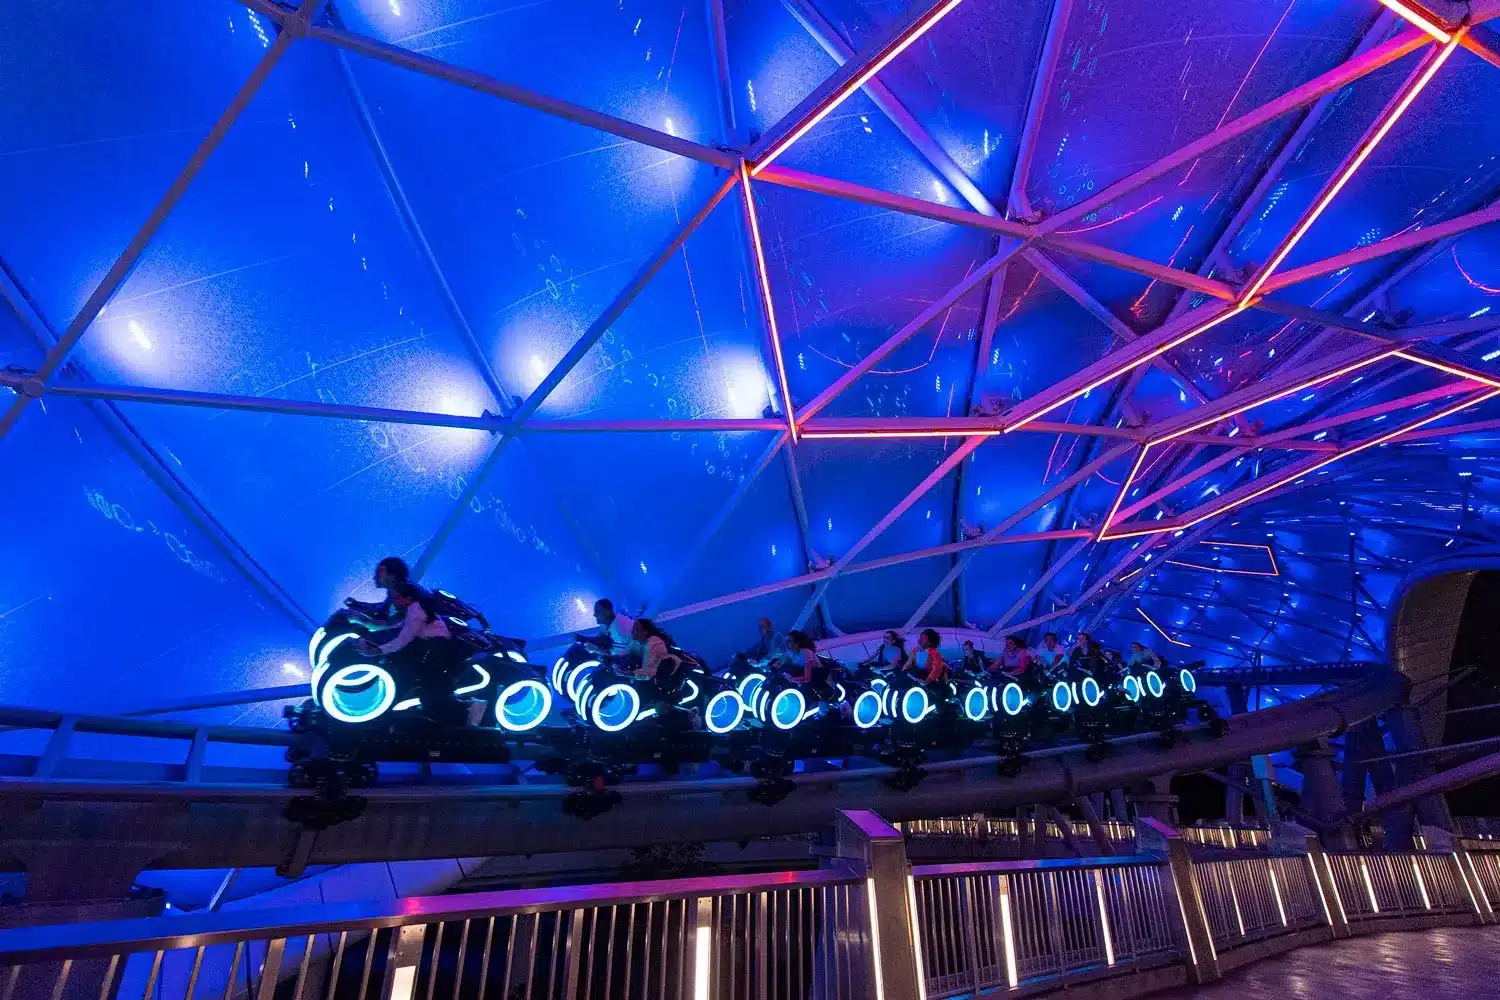 Tron Lightcycle Run at Disney World at night